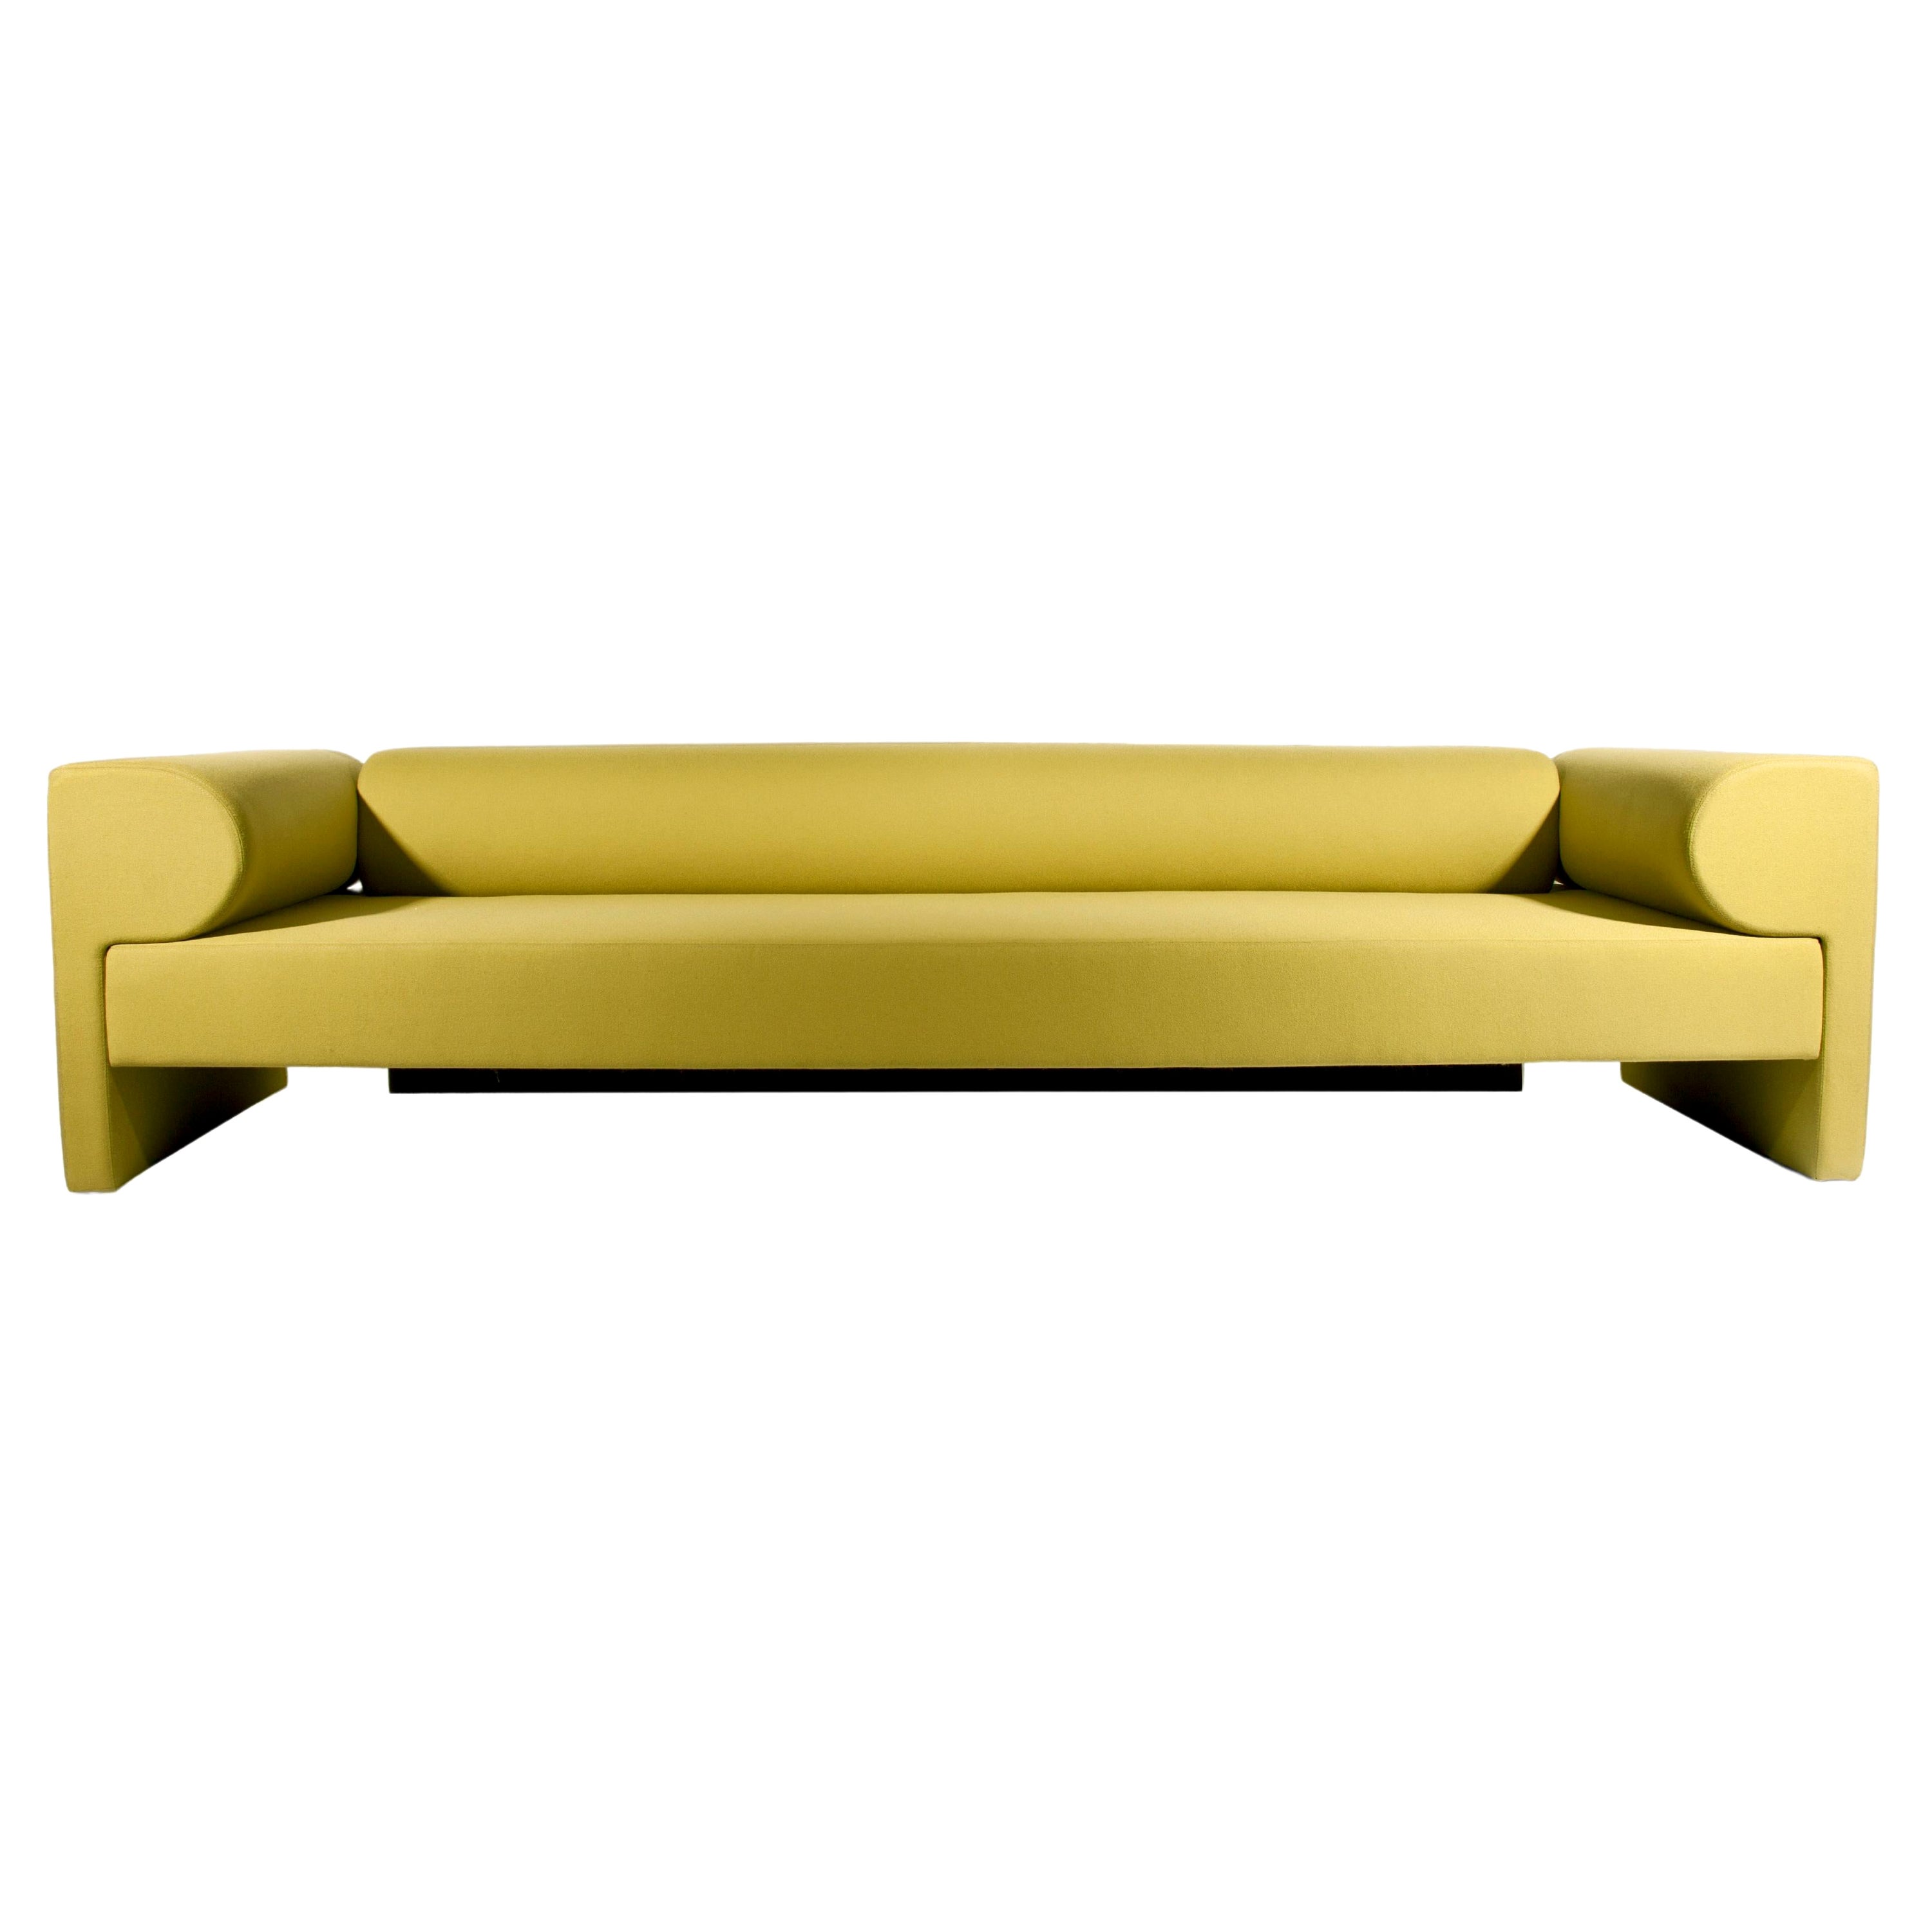 Gelbes Say-Sofa von Gentner Design